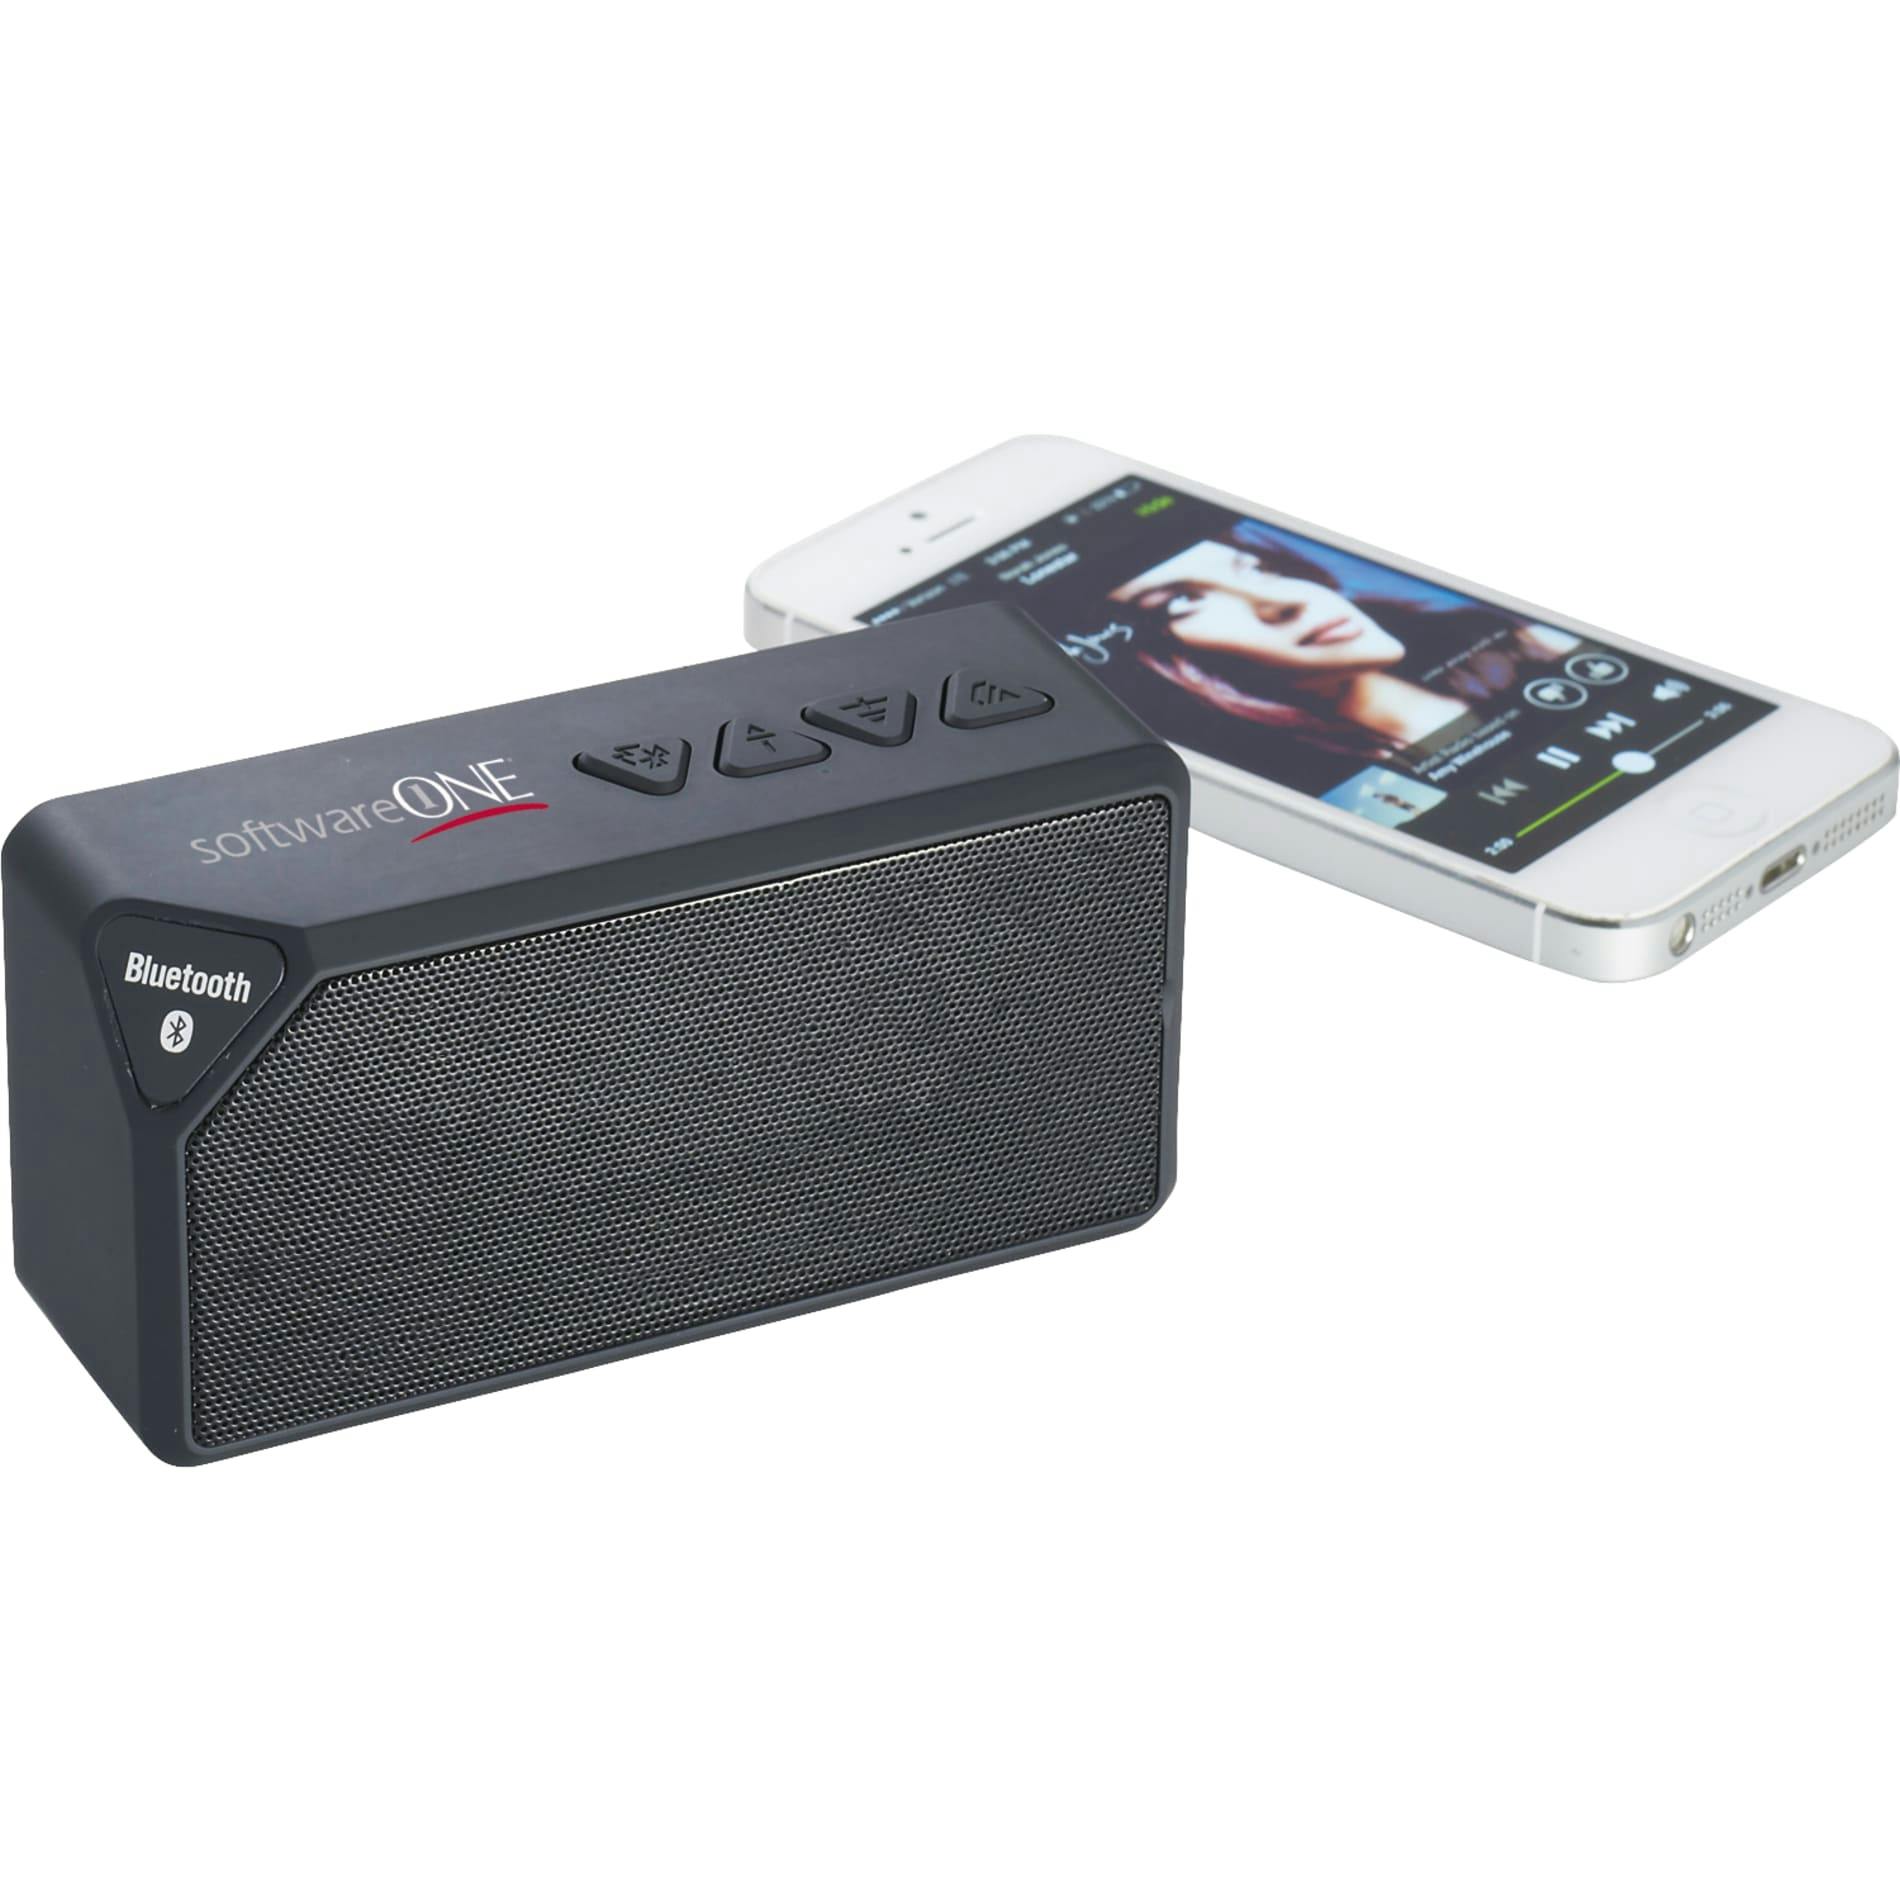 Jabba Bluetooth Speaker - additional Image 2